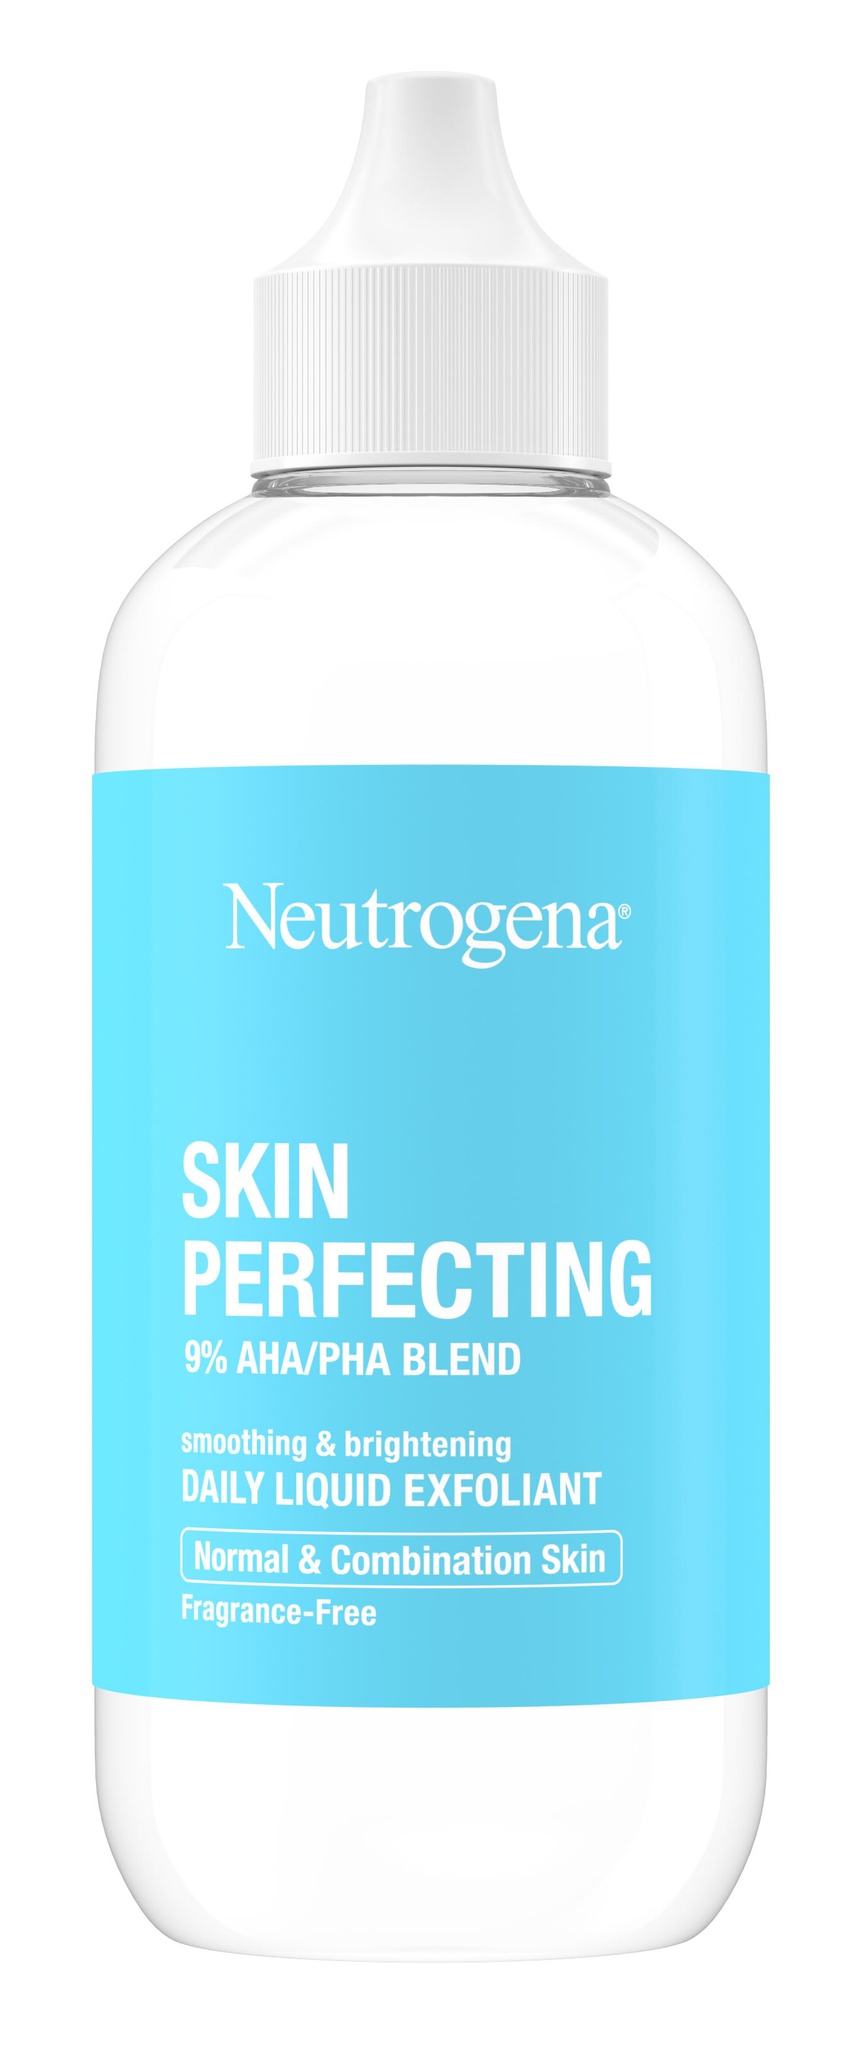 Neutrogena Skin Perfecting Normal/Combination Skin Facial Exfoliant